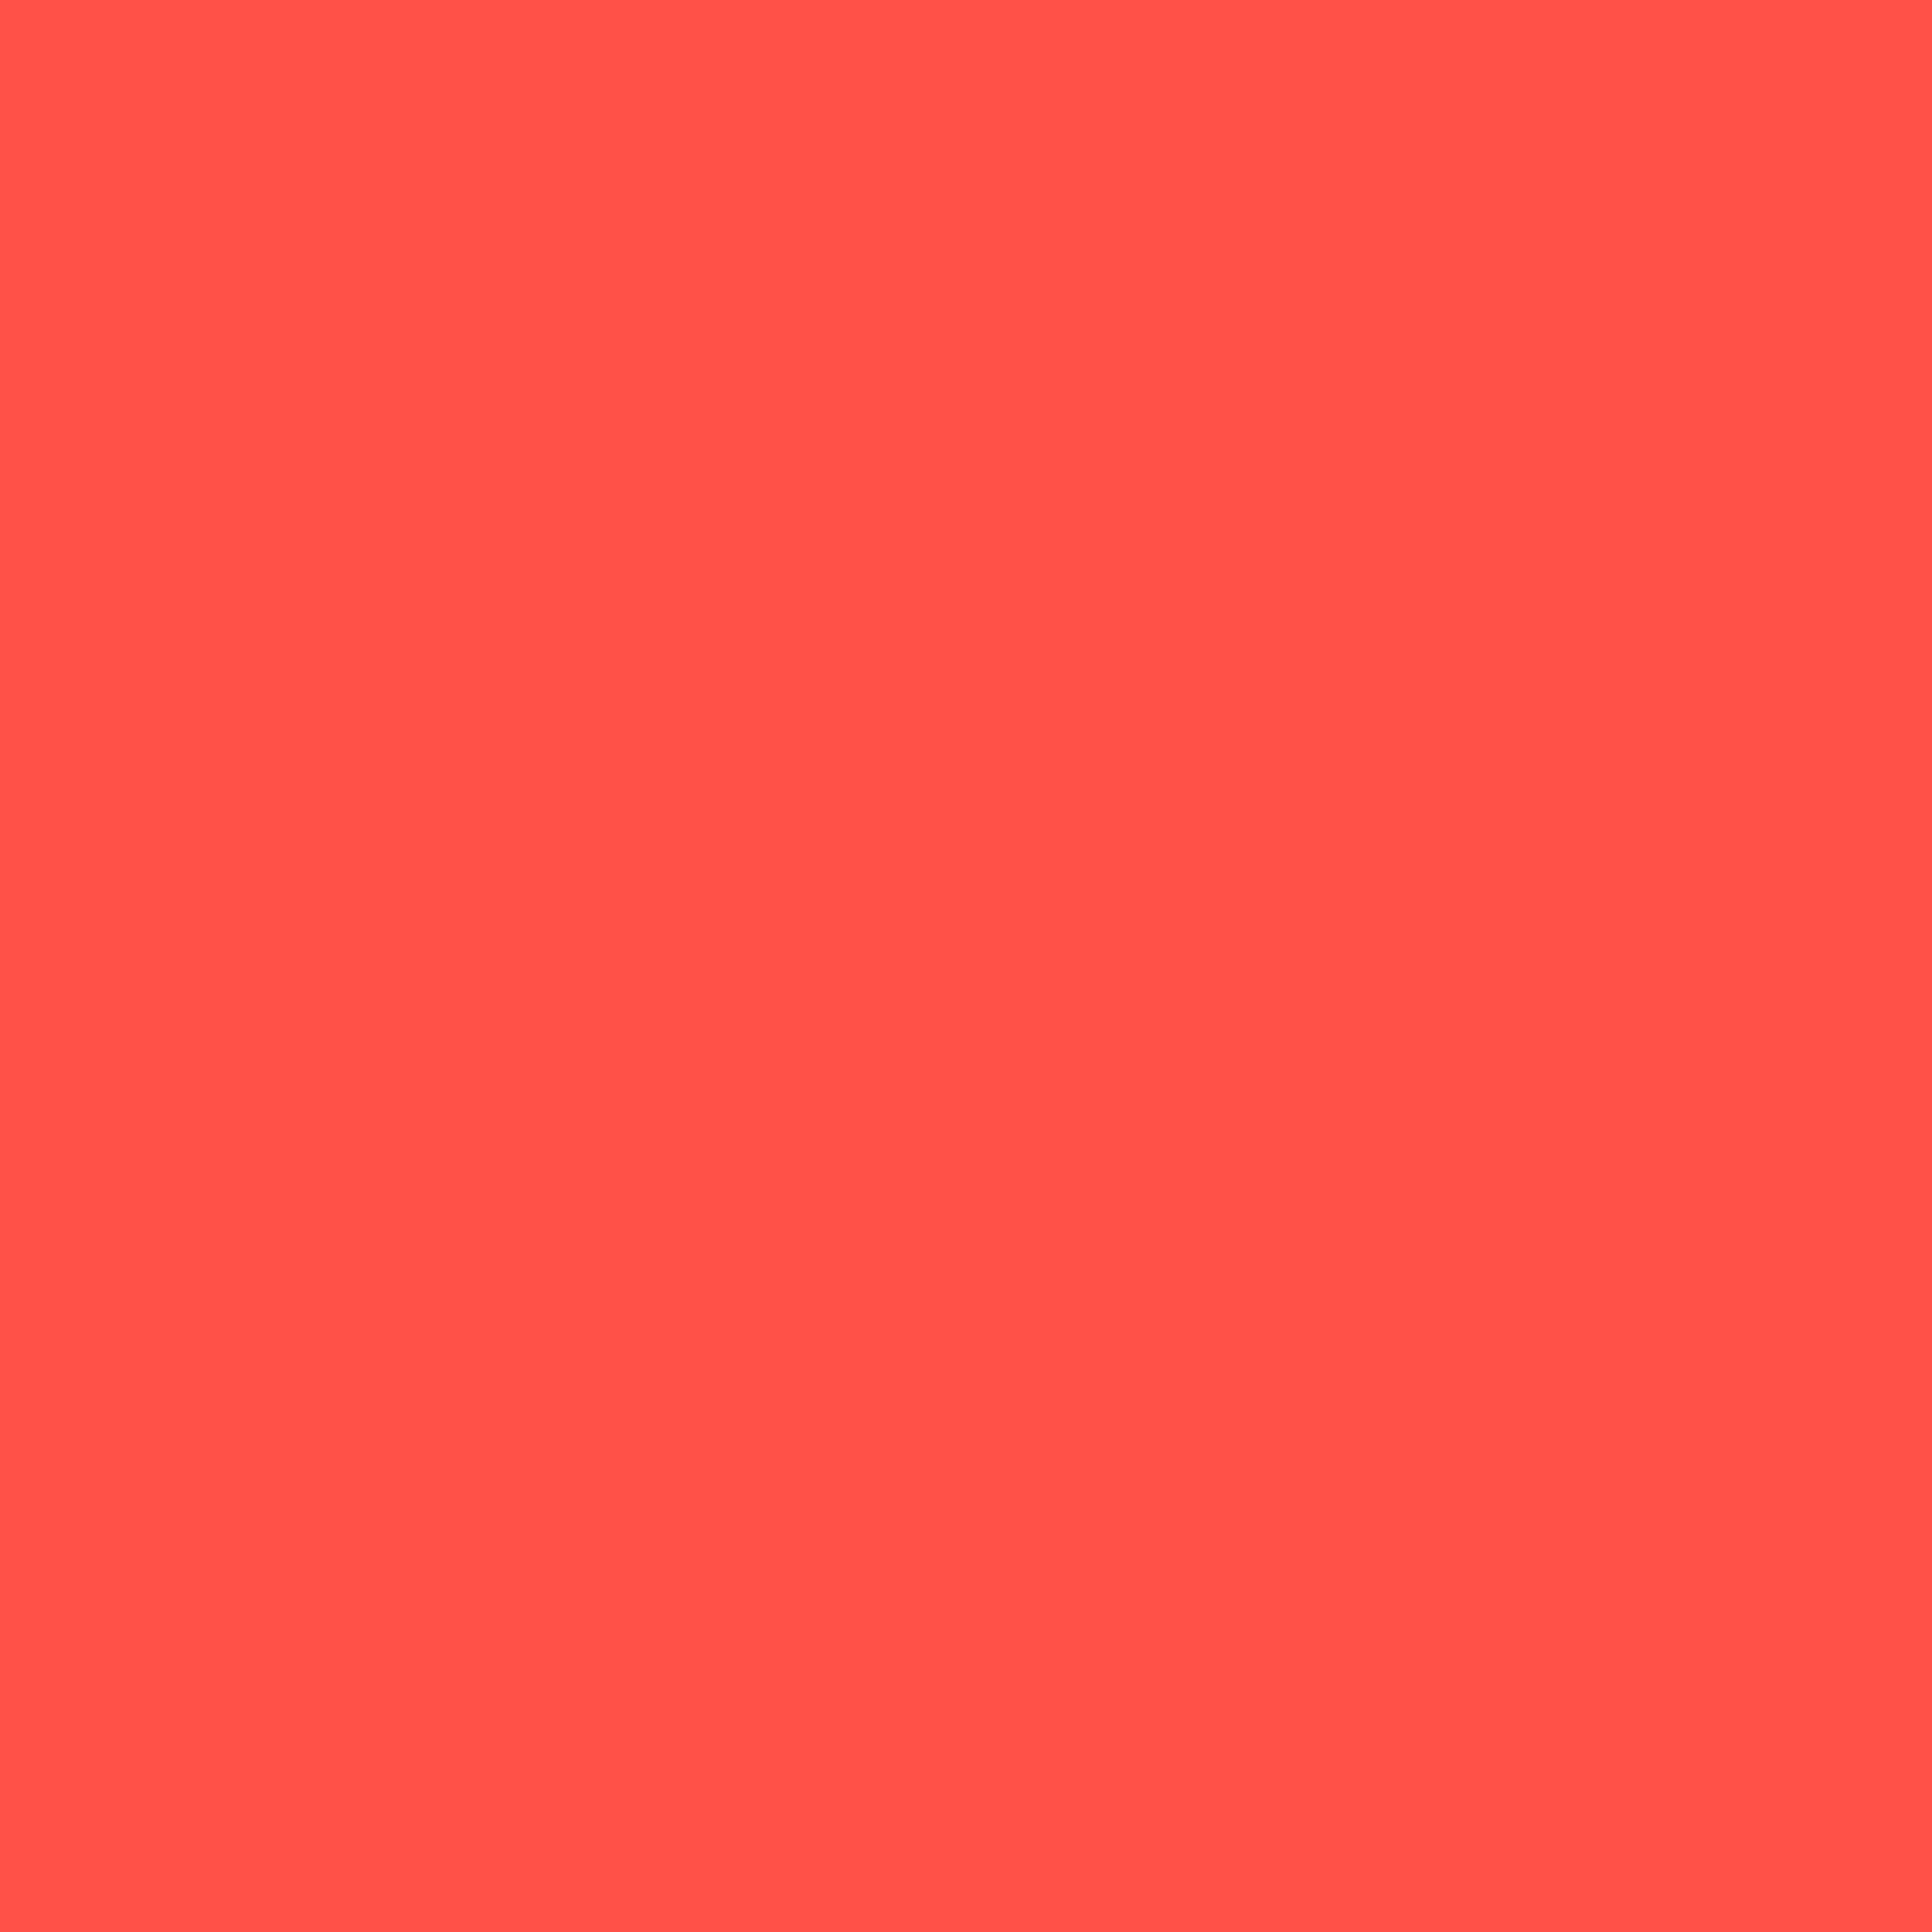 2732x2732 Red-orange Solid Color Background